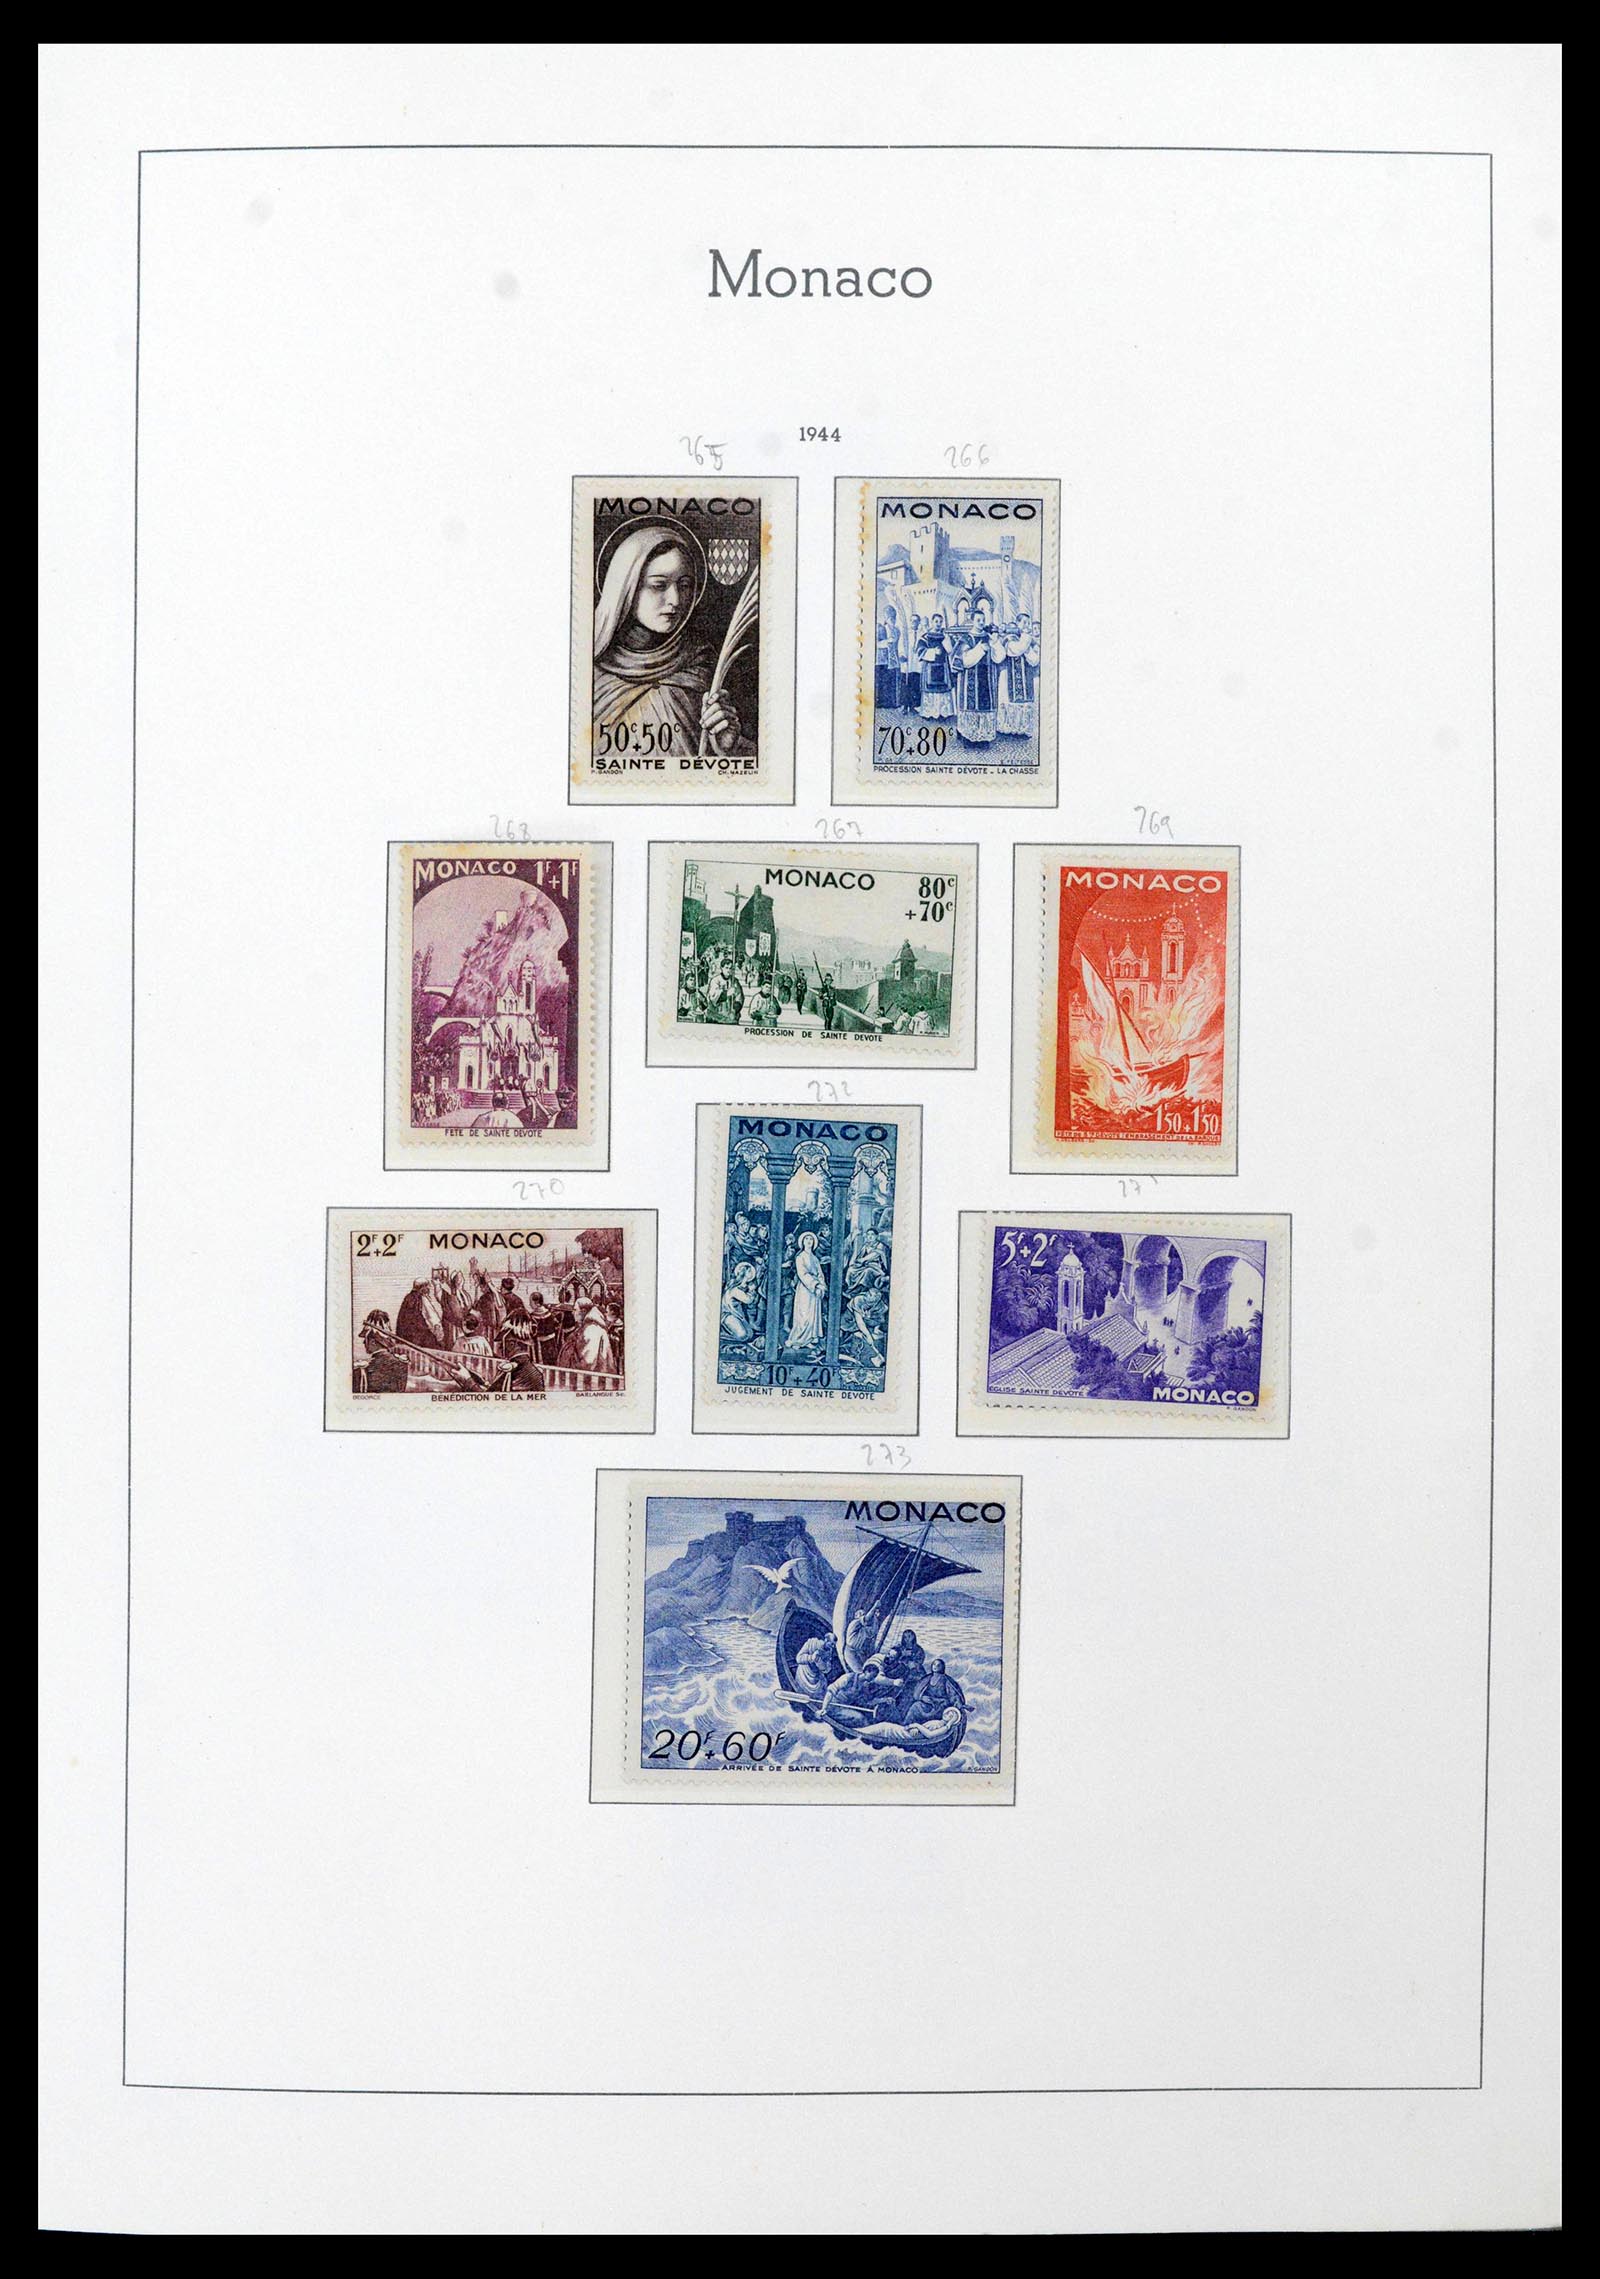 39250 0025 - Stamp collection 39250 Monaco 1885-1995.